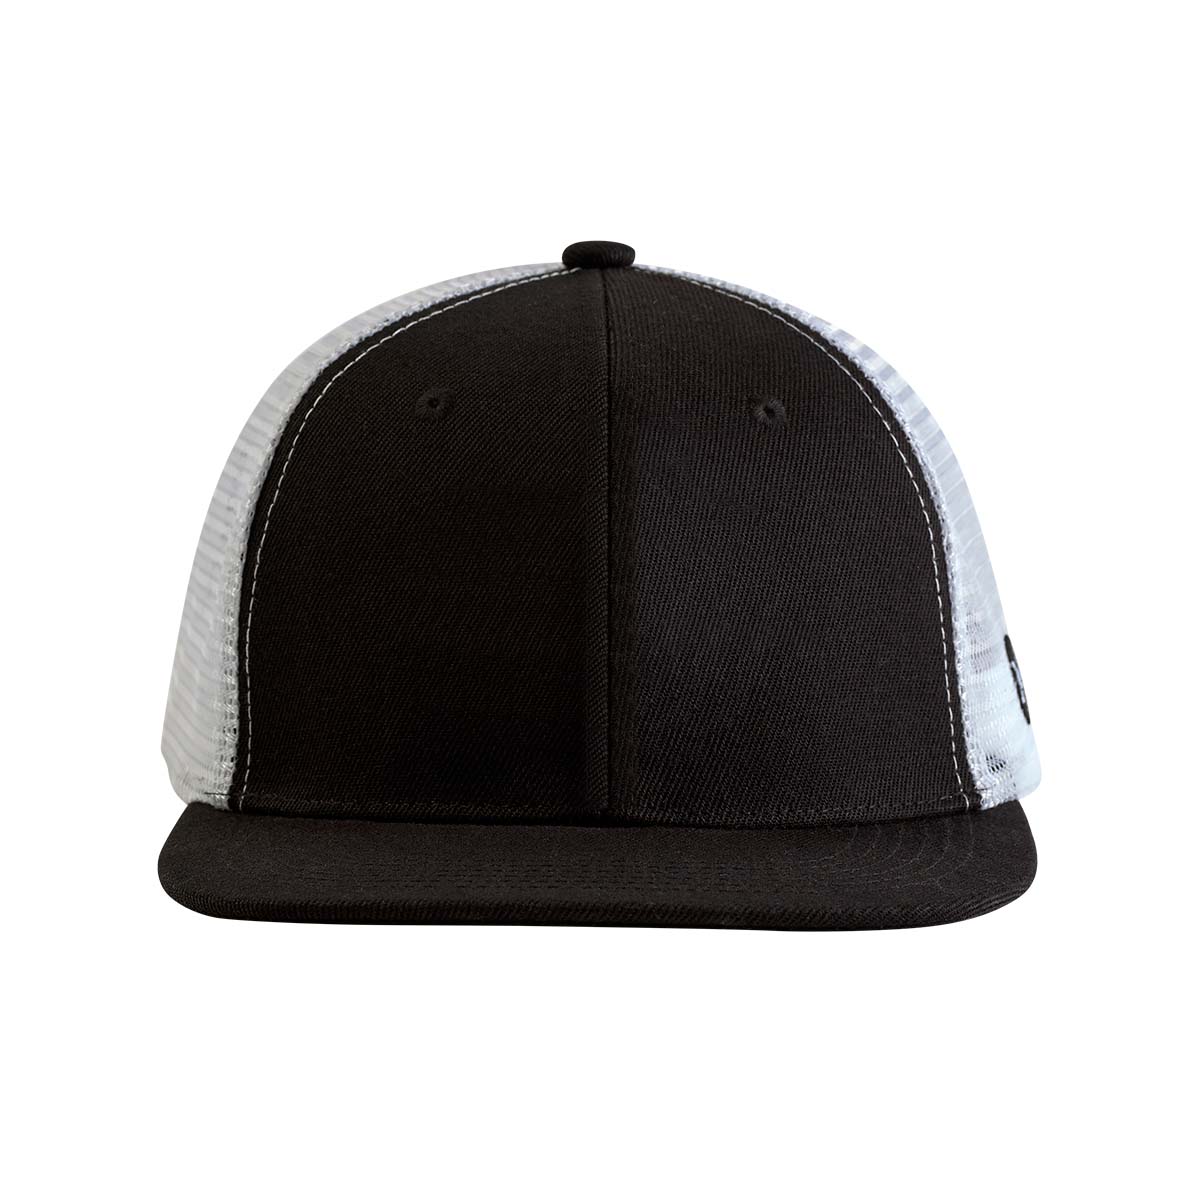 Navy Blank Snapback Hat - Sleek, Comfortable Design - Mammoth Headwear